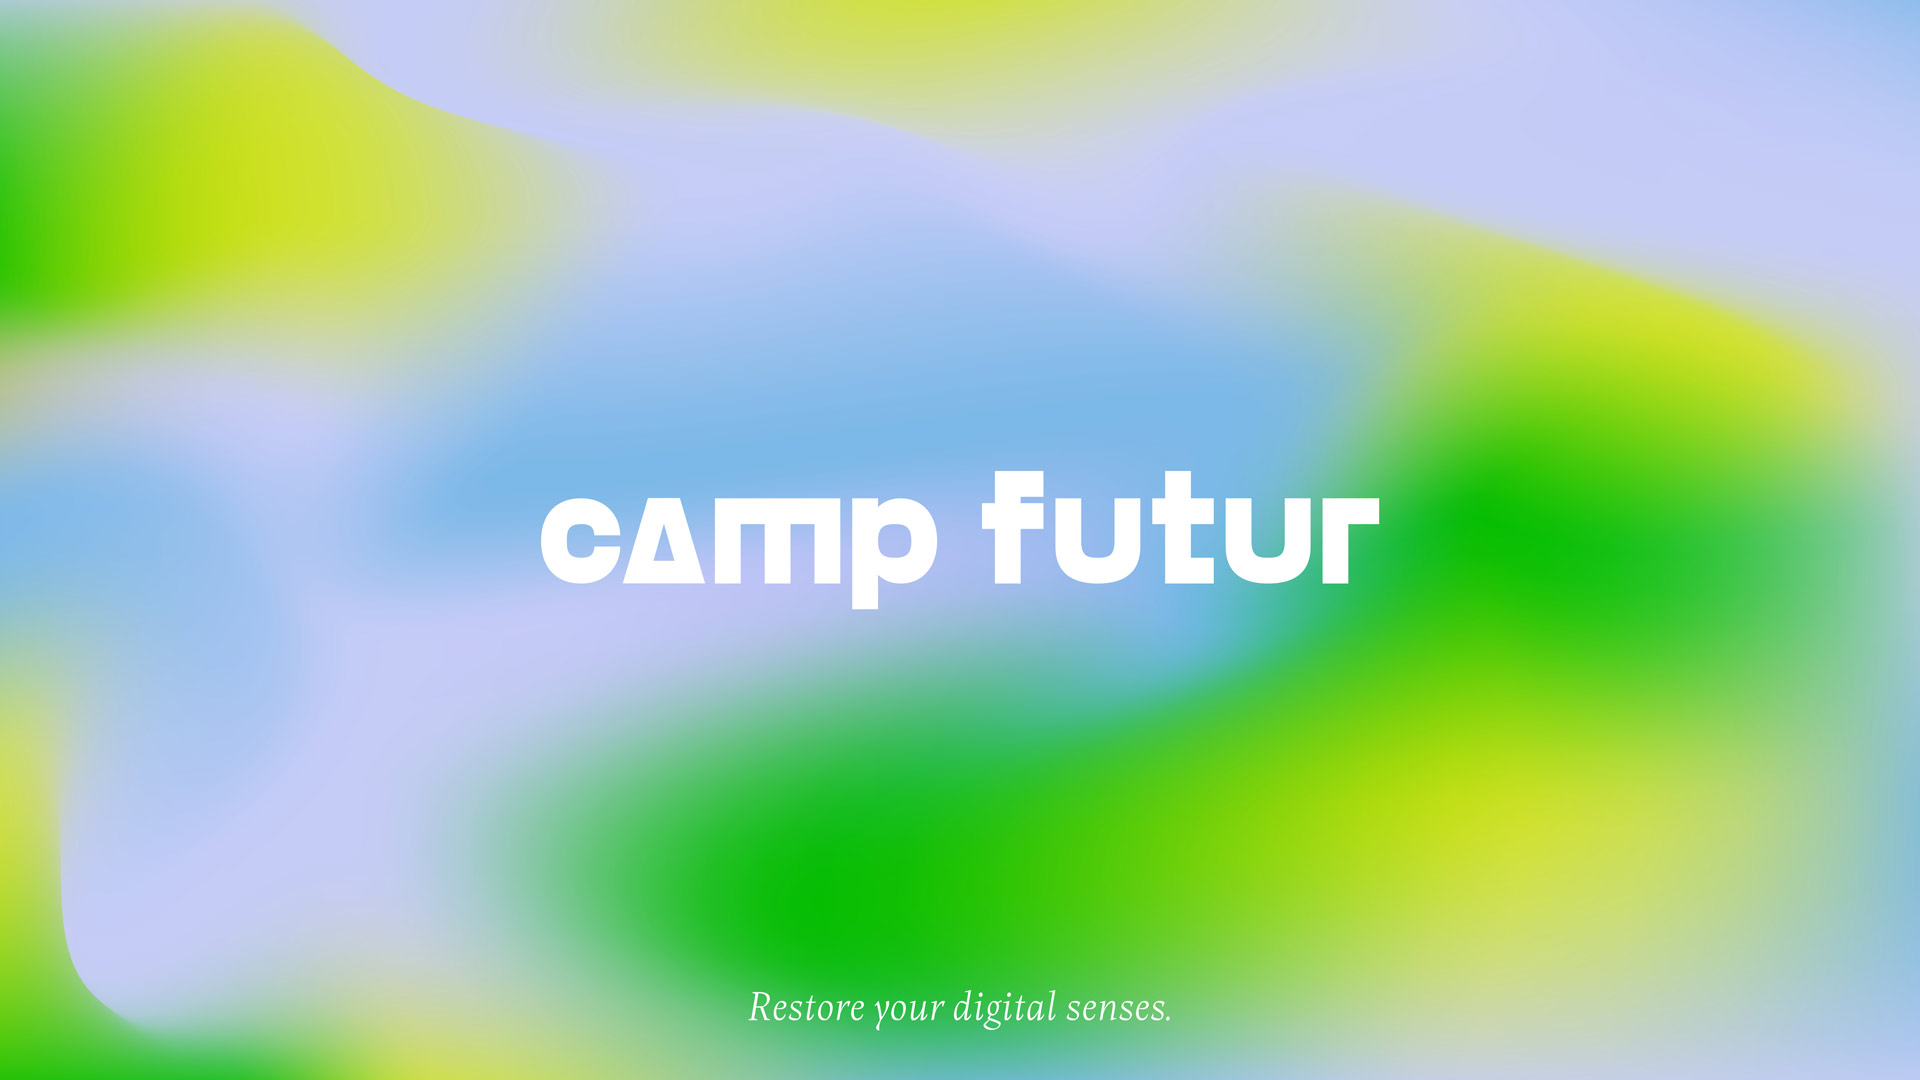 Camp Futur logo and tagline, "Restore your digital sense"